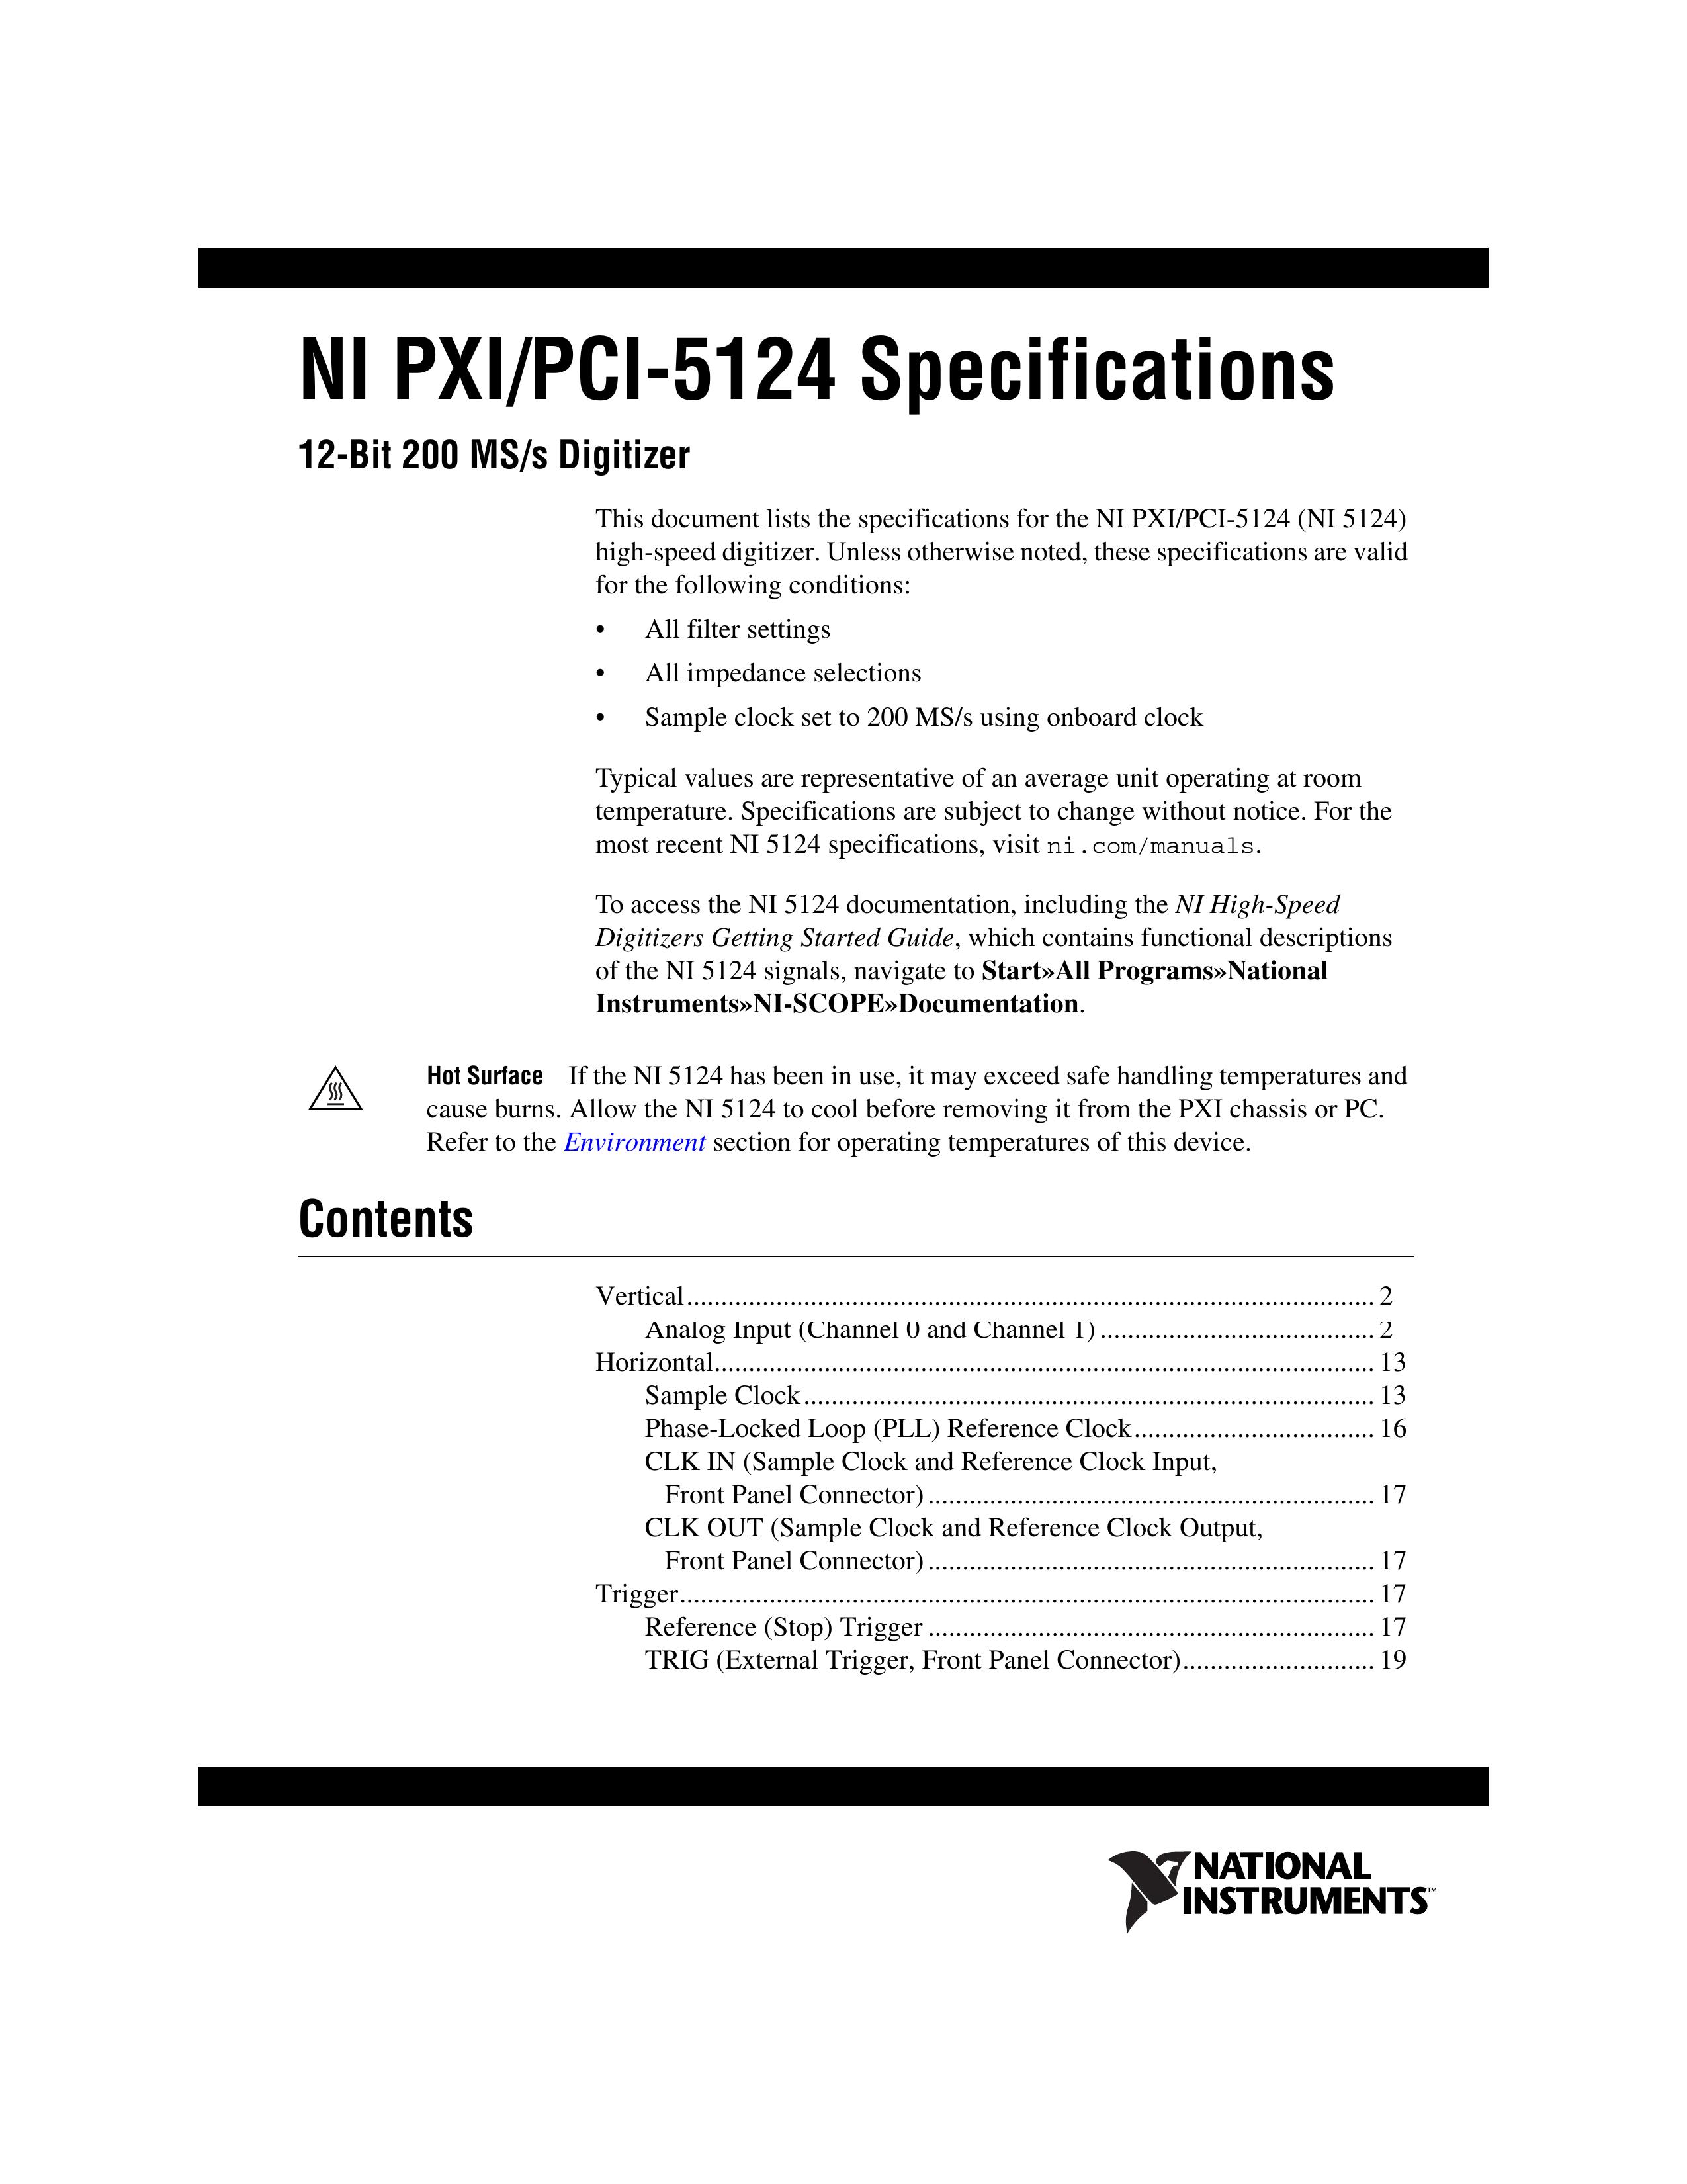 National Instruments 12-Bit 200 MS/s Digitizer Digital Photo Keychain User Manual